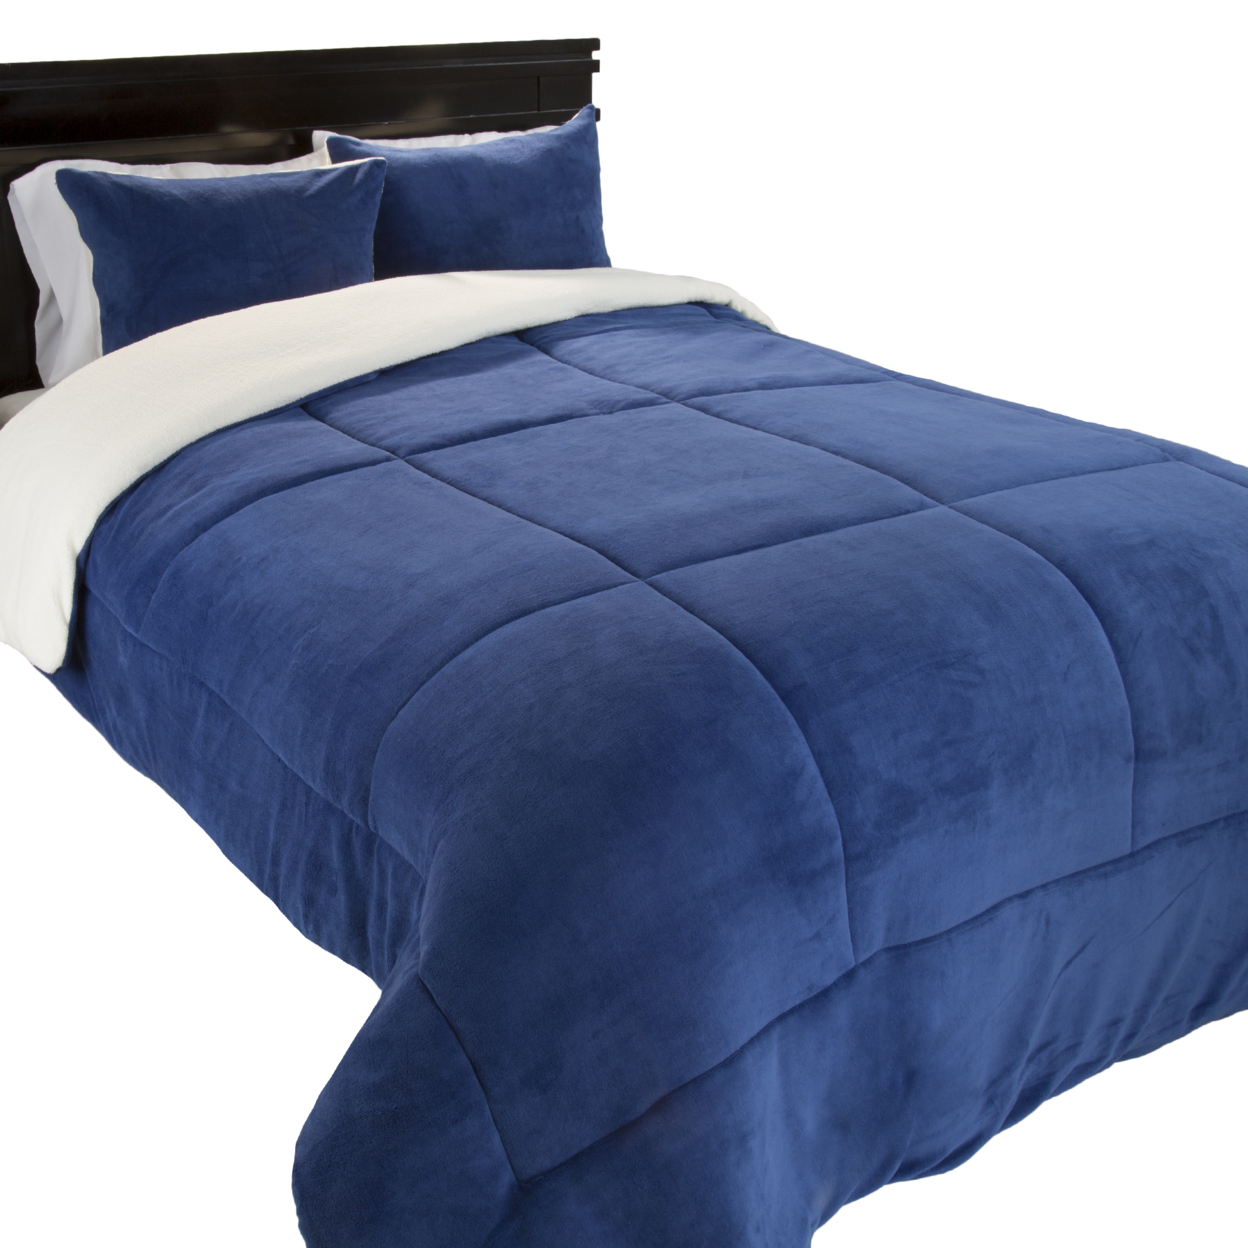 Lavish Home 3 Piece Sherpa/Fleece Comforter Set - F/Q - Navy